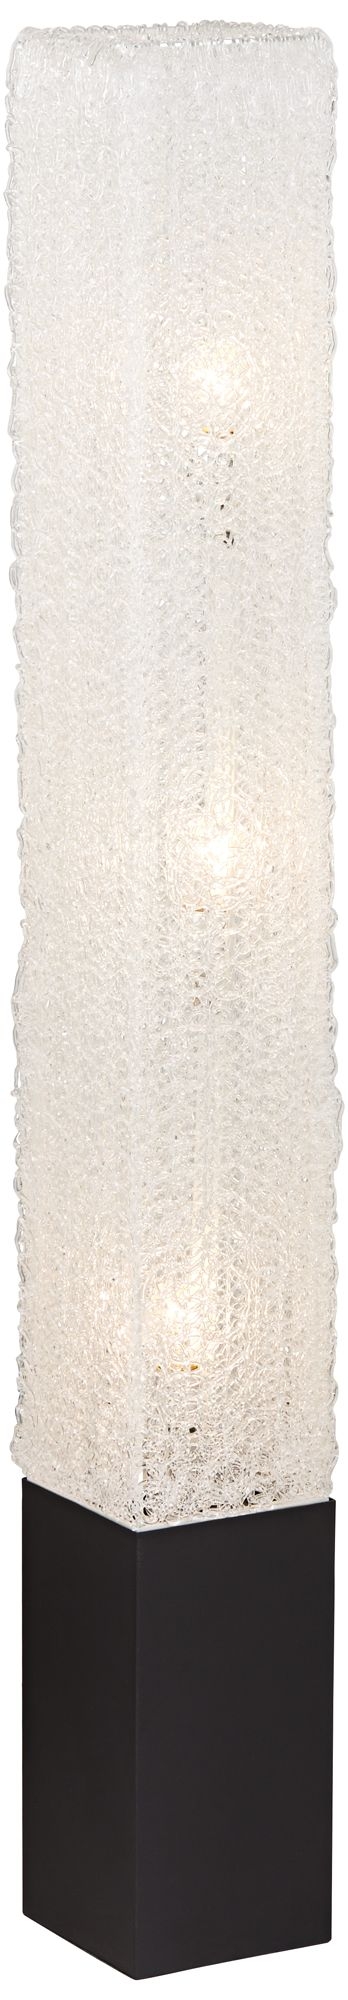 Textured Clear Acrylic Rectangular Floor Lamp - Image 0